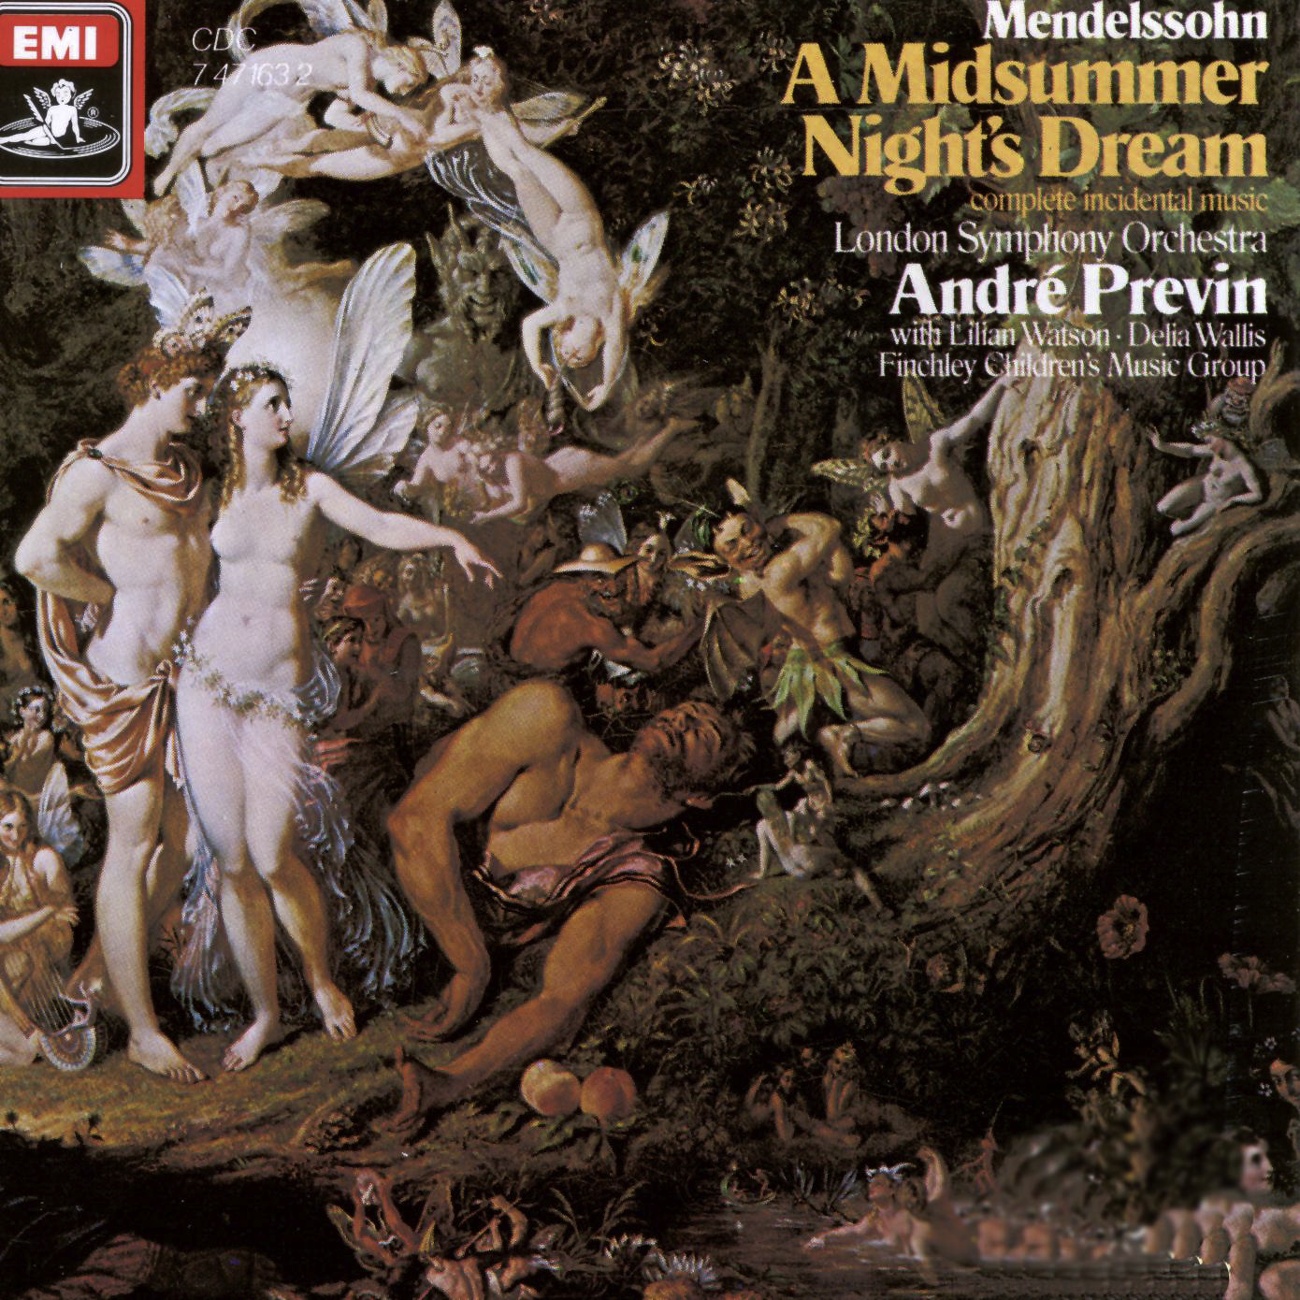 A Midsummer Night's Dream - incidental music Opp. 21 and 61 (1985 Digital Remaster): Bergomask (Dance of the Rustics: Act 5)